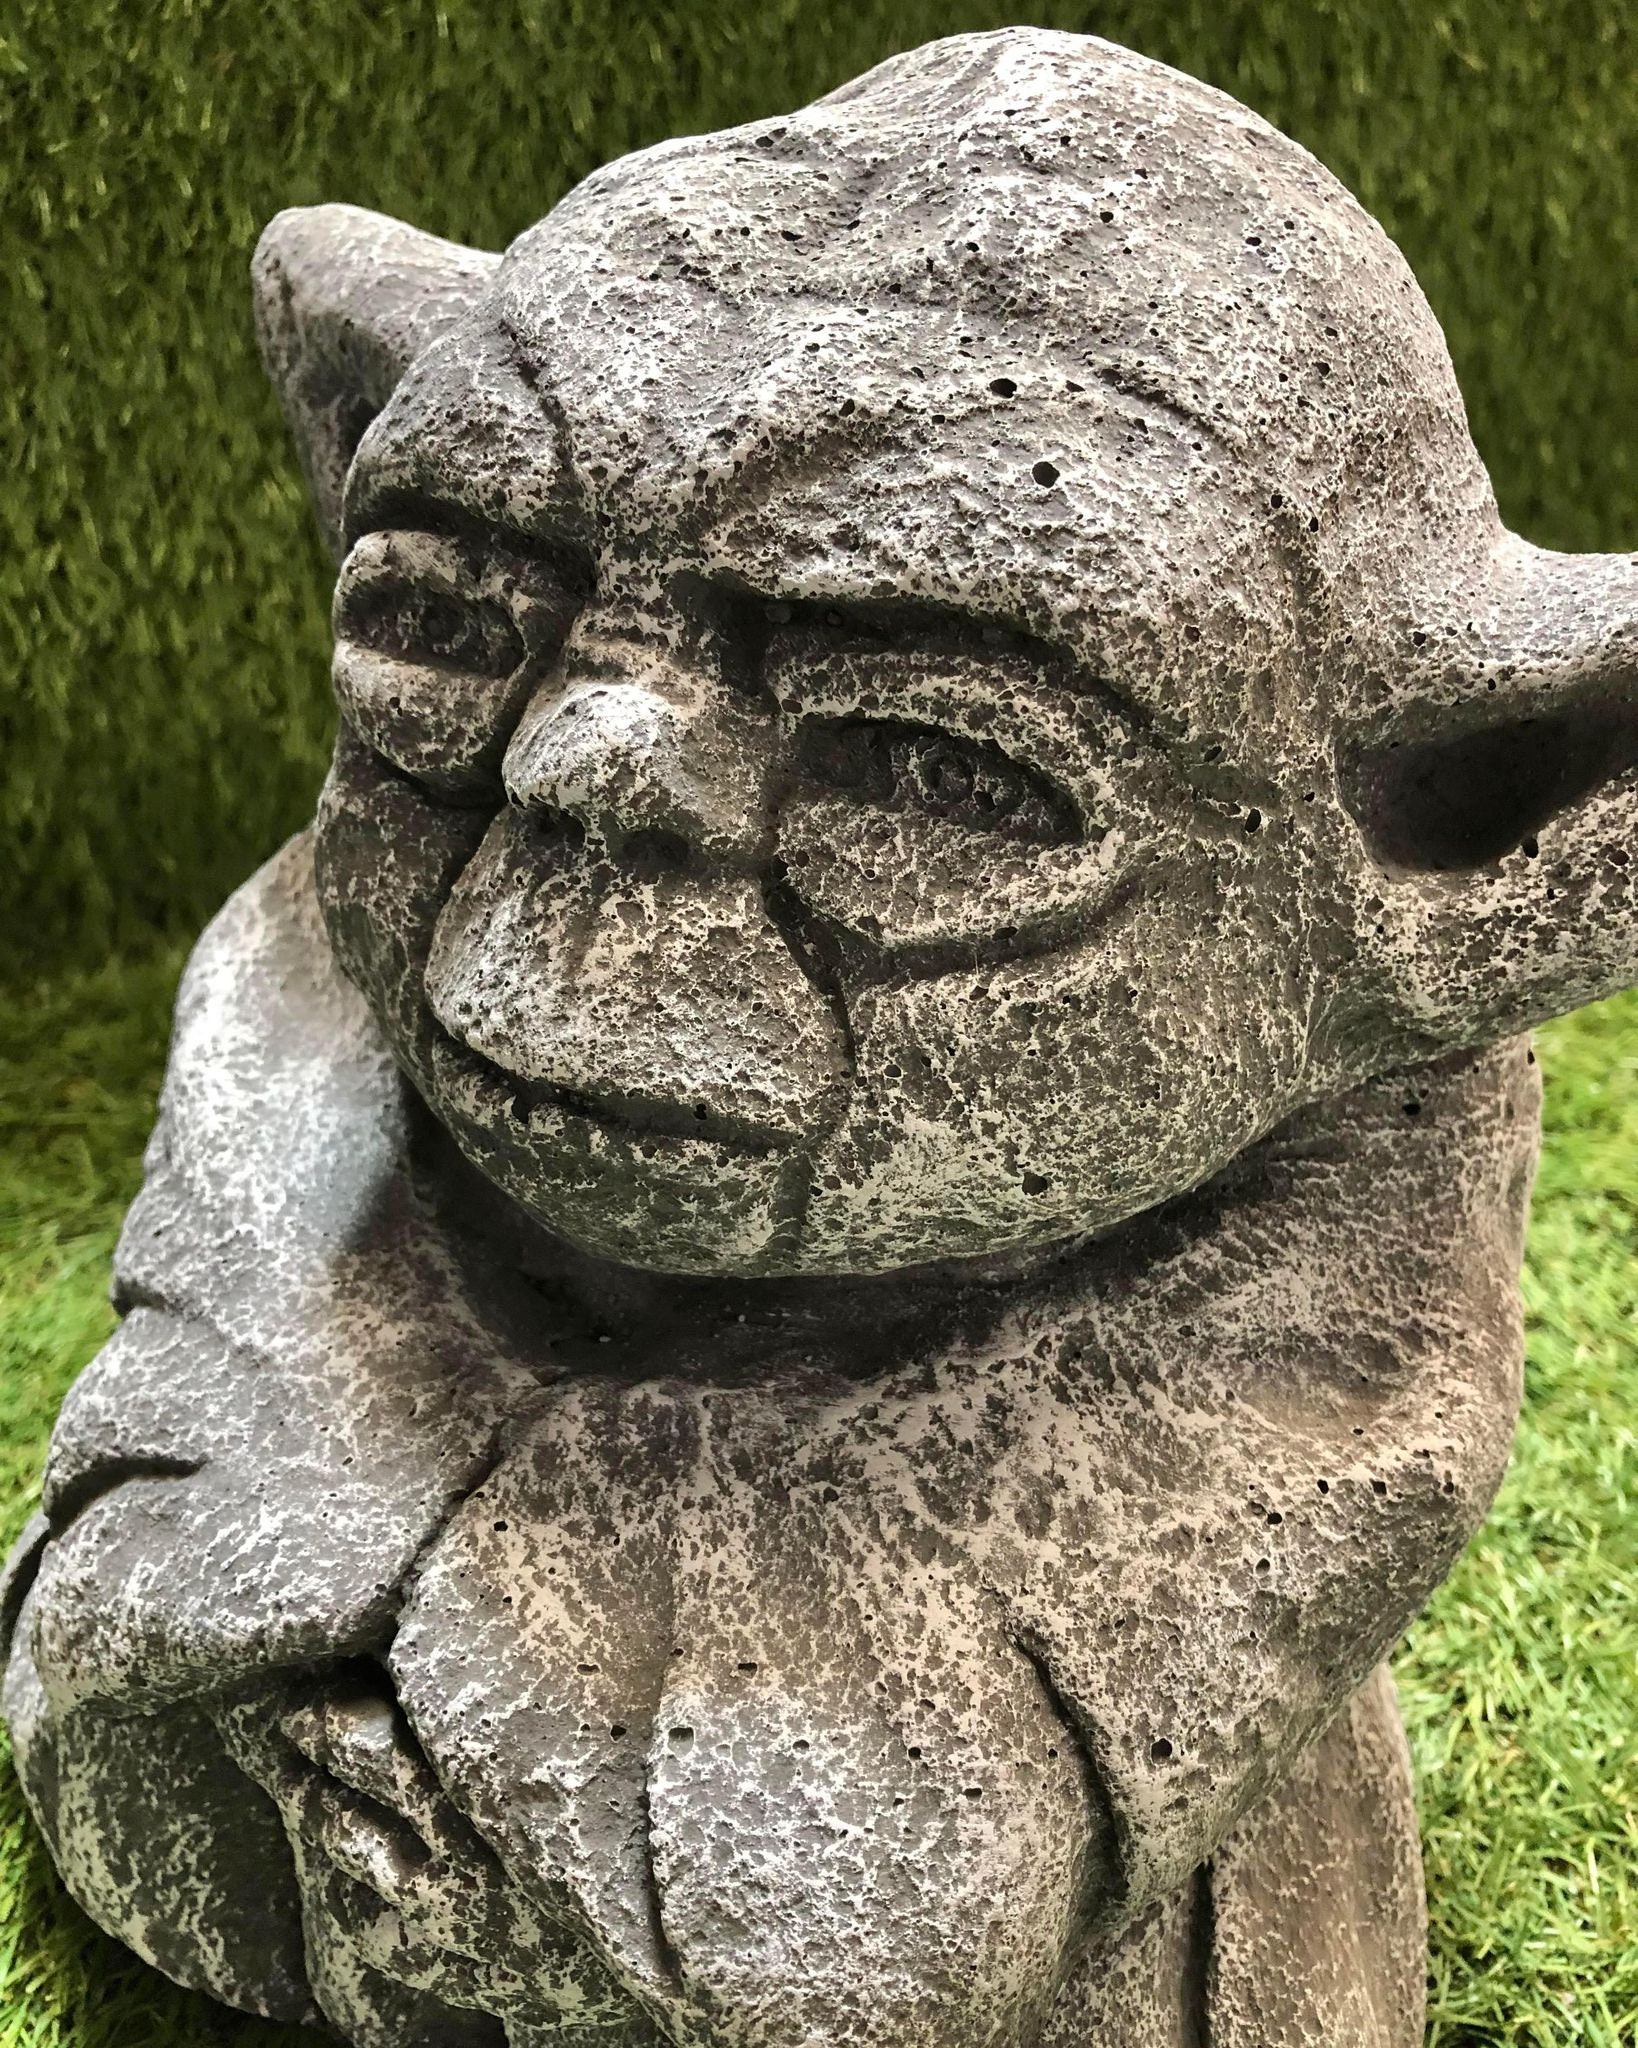 Concrete Yoda Sculpture Garden Lawn Ornament / Star Wars Concrete Stone  Figure Frost Protected 